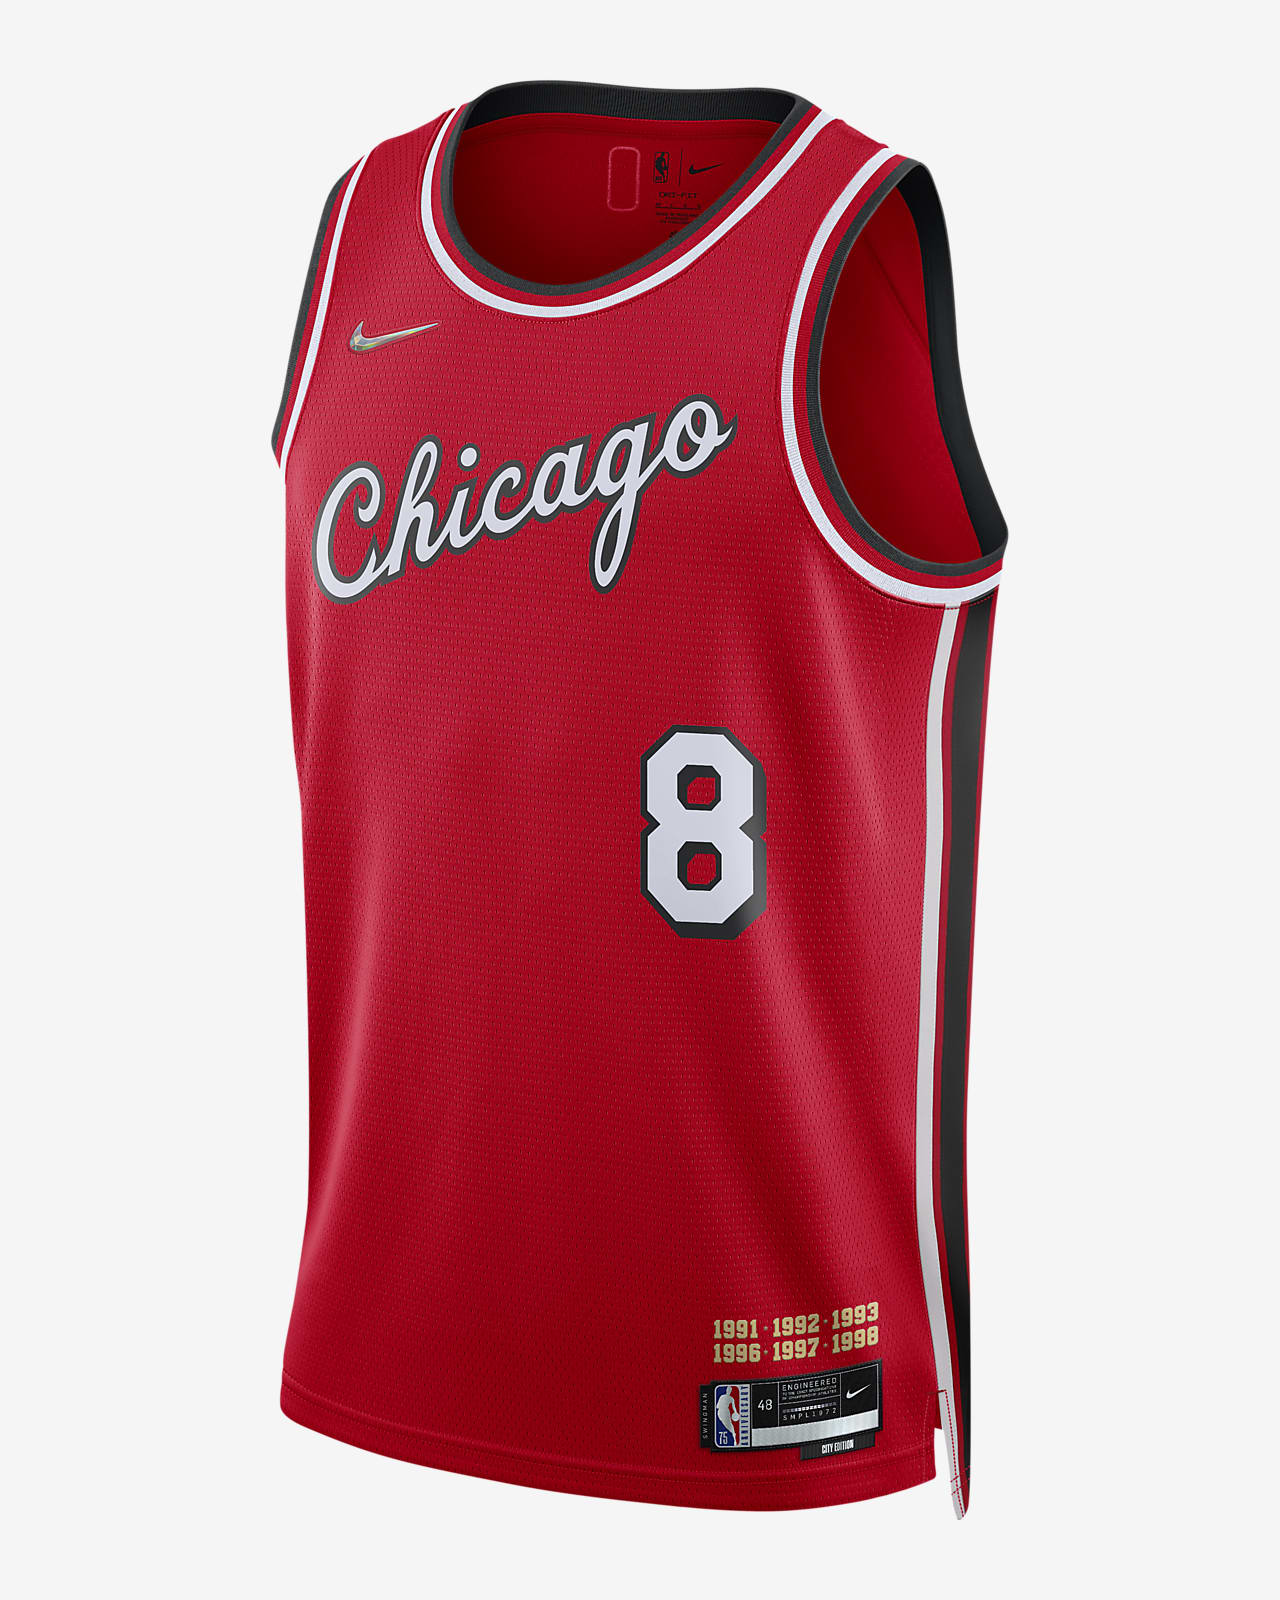 Chicago Bulls City Edition Nike Dri-FIT NBA Swingman Trikot